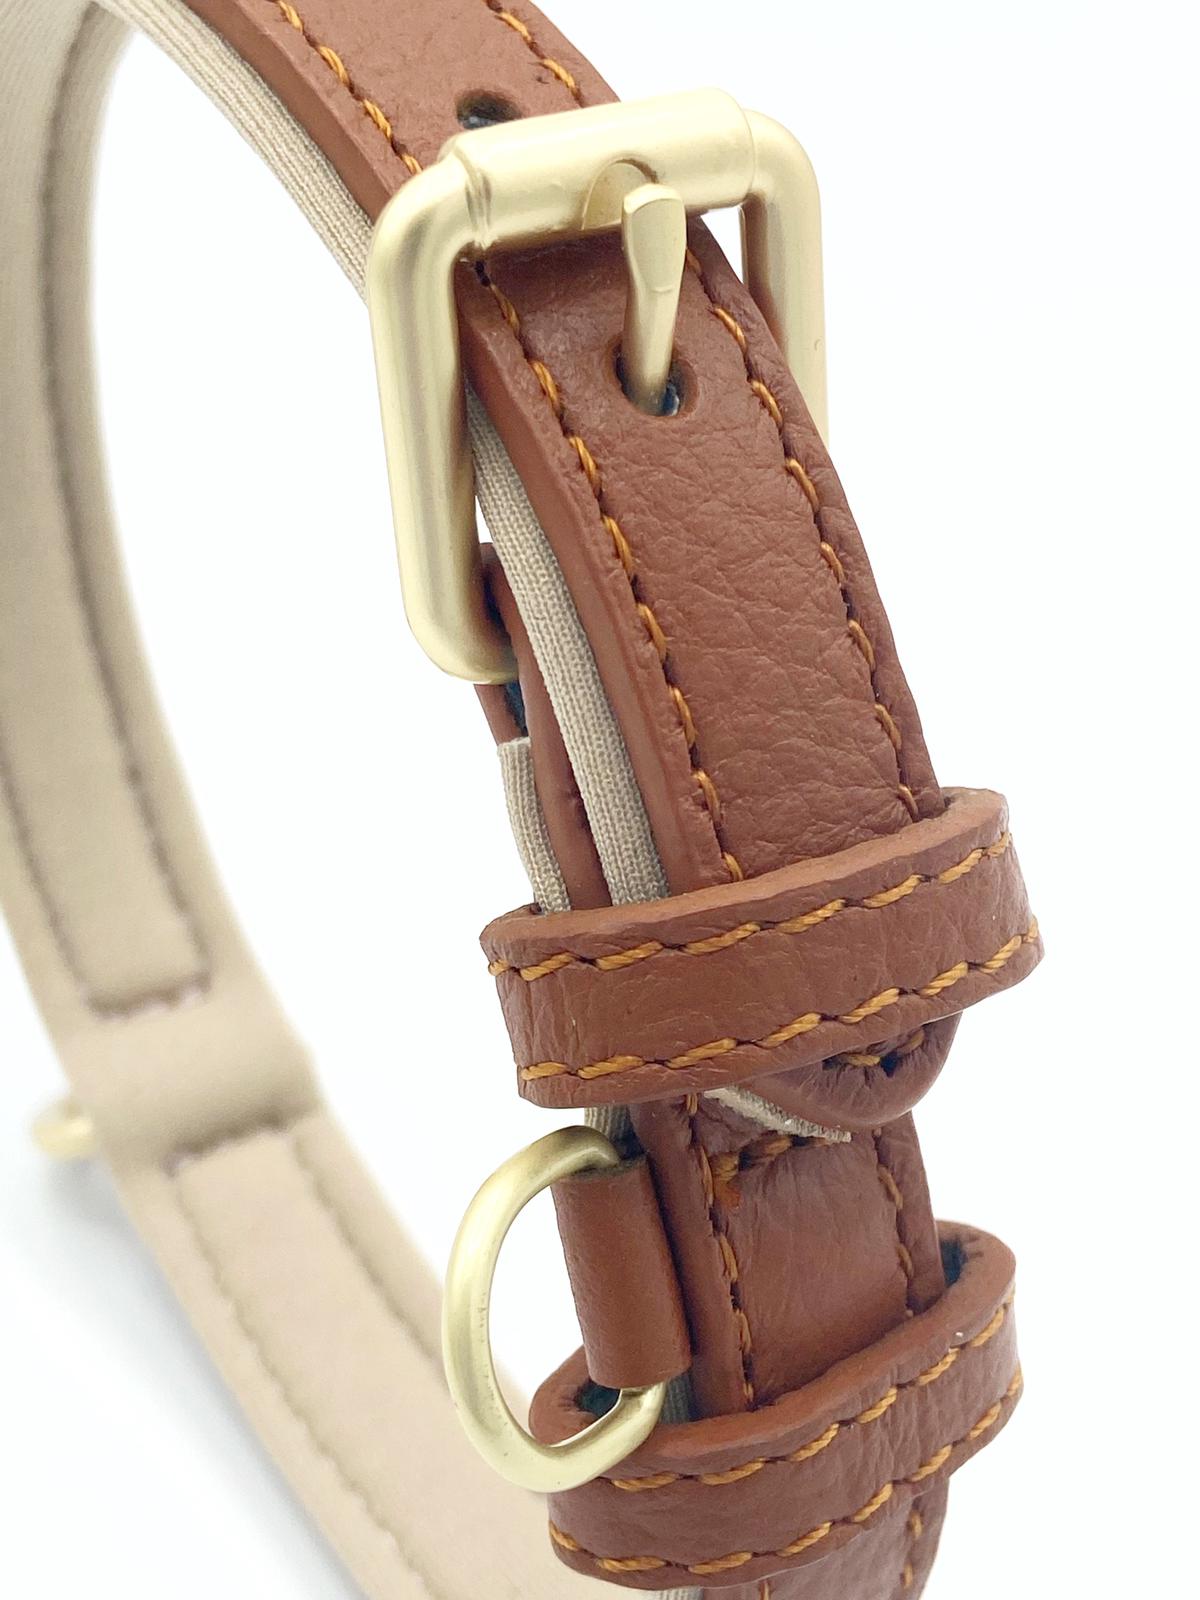 Brown leather dog collar